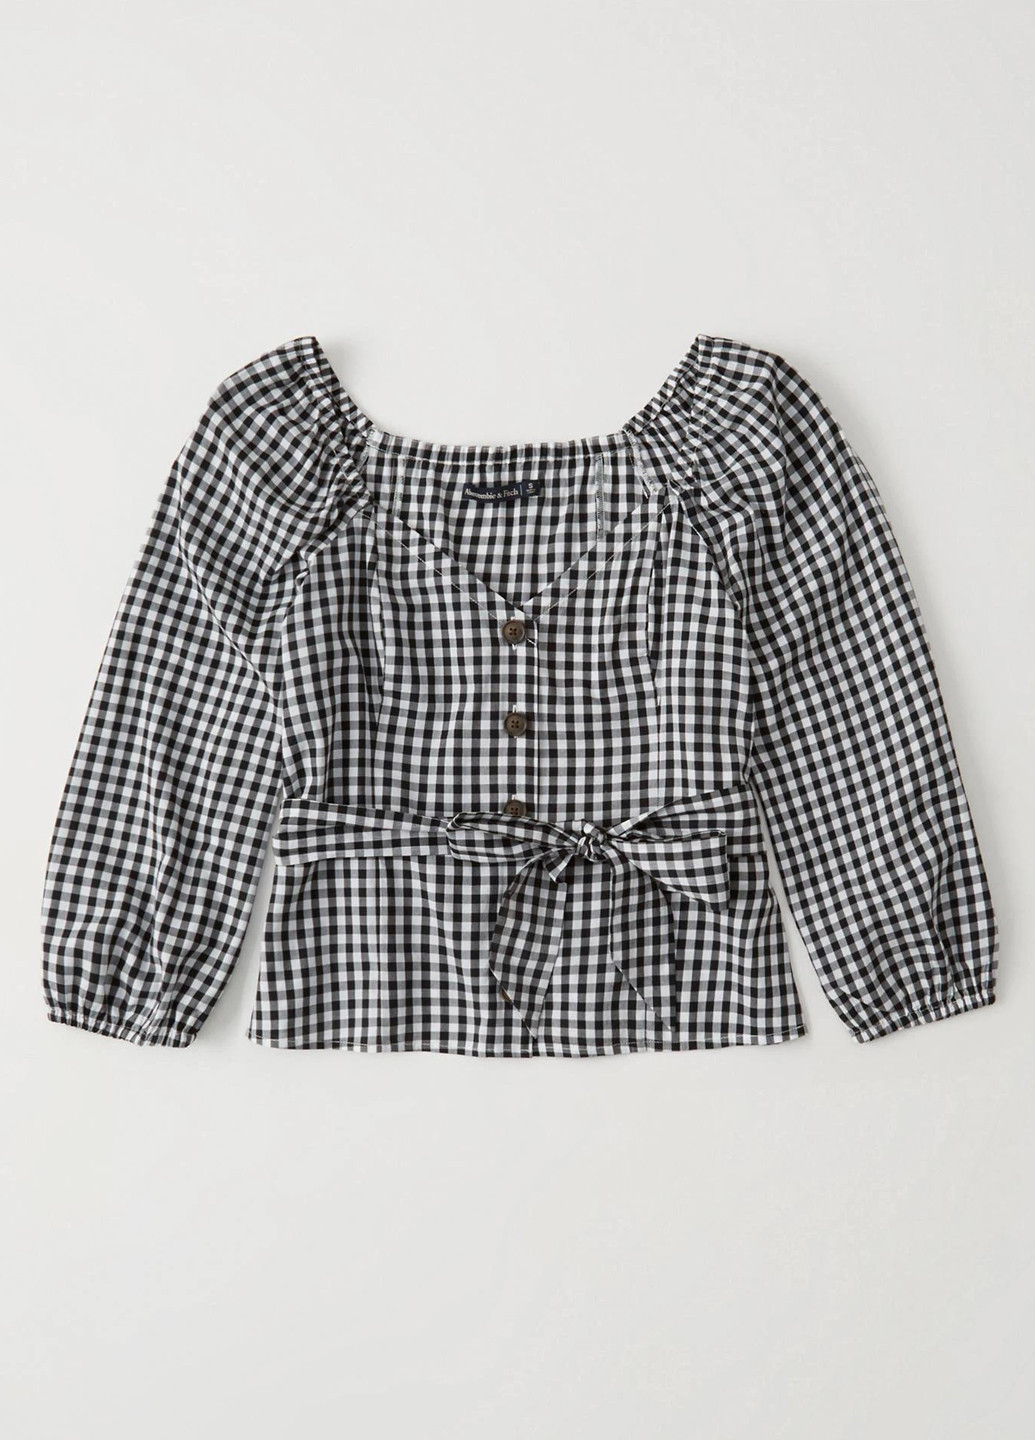 Черно-белая демисезонная блузка Abercrombie & Fitch